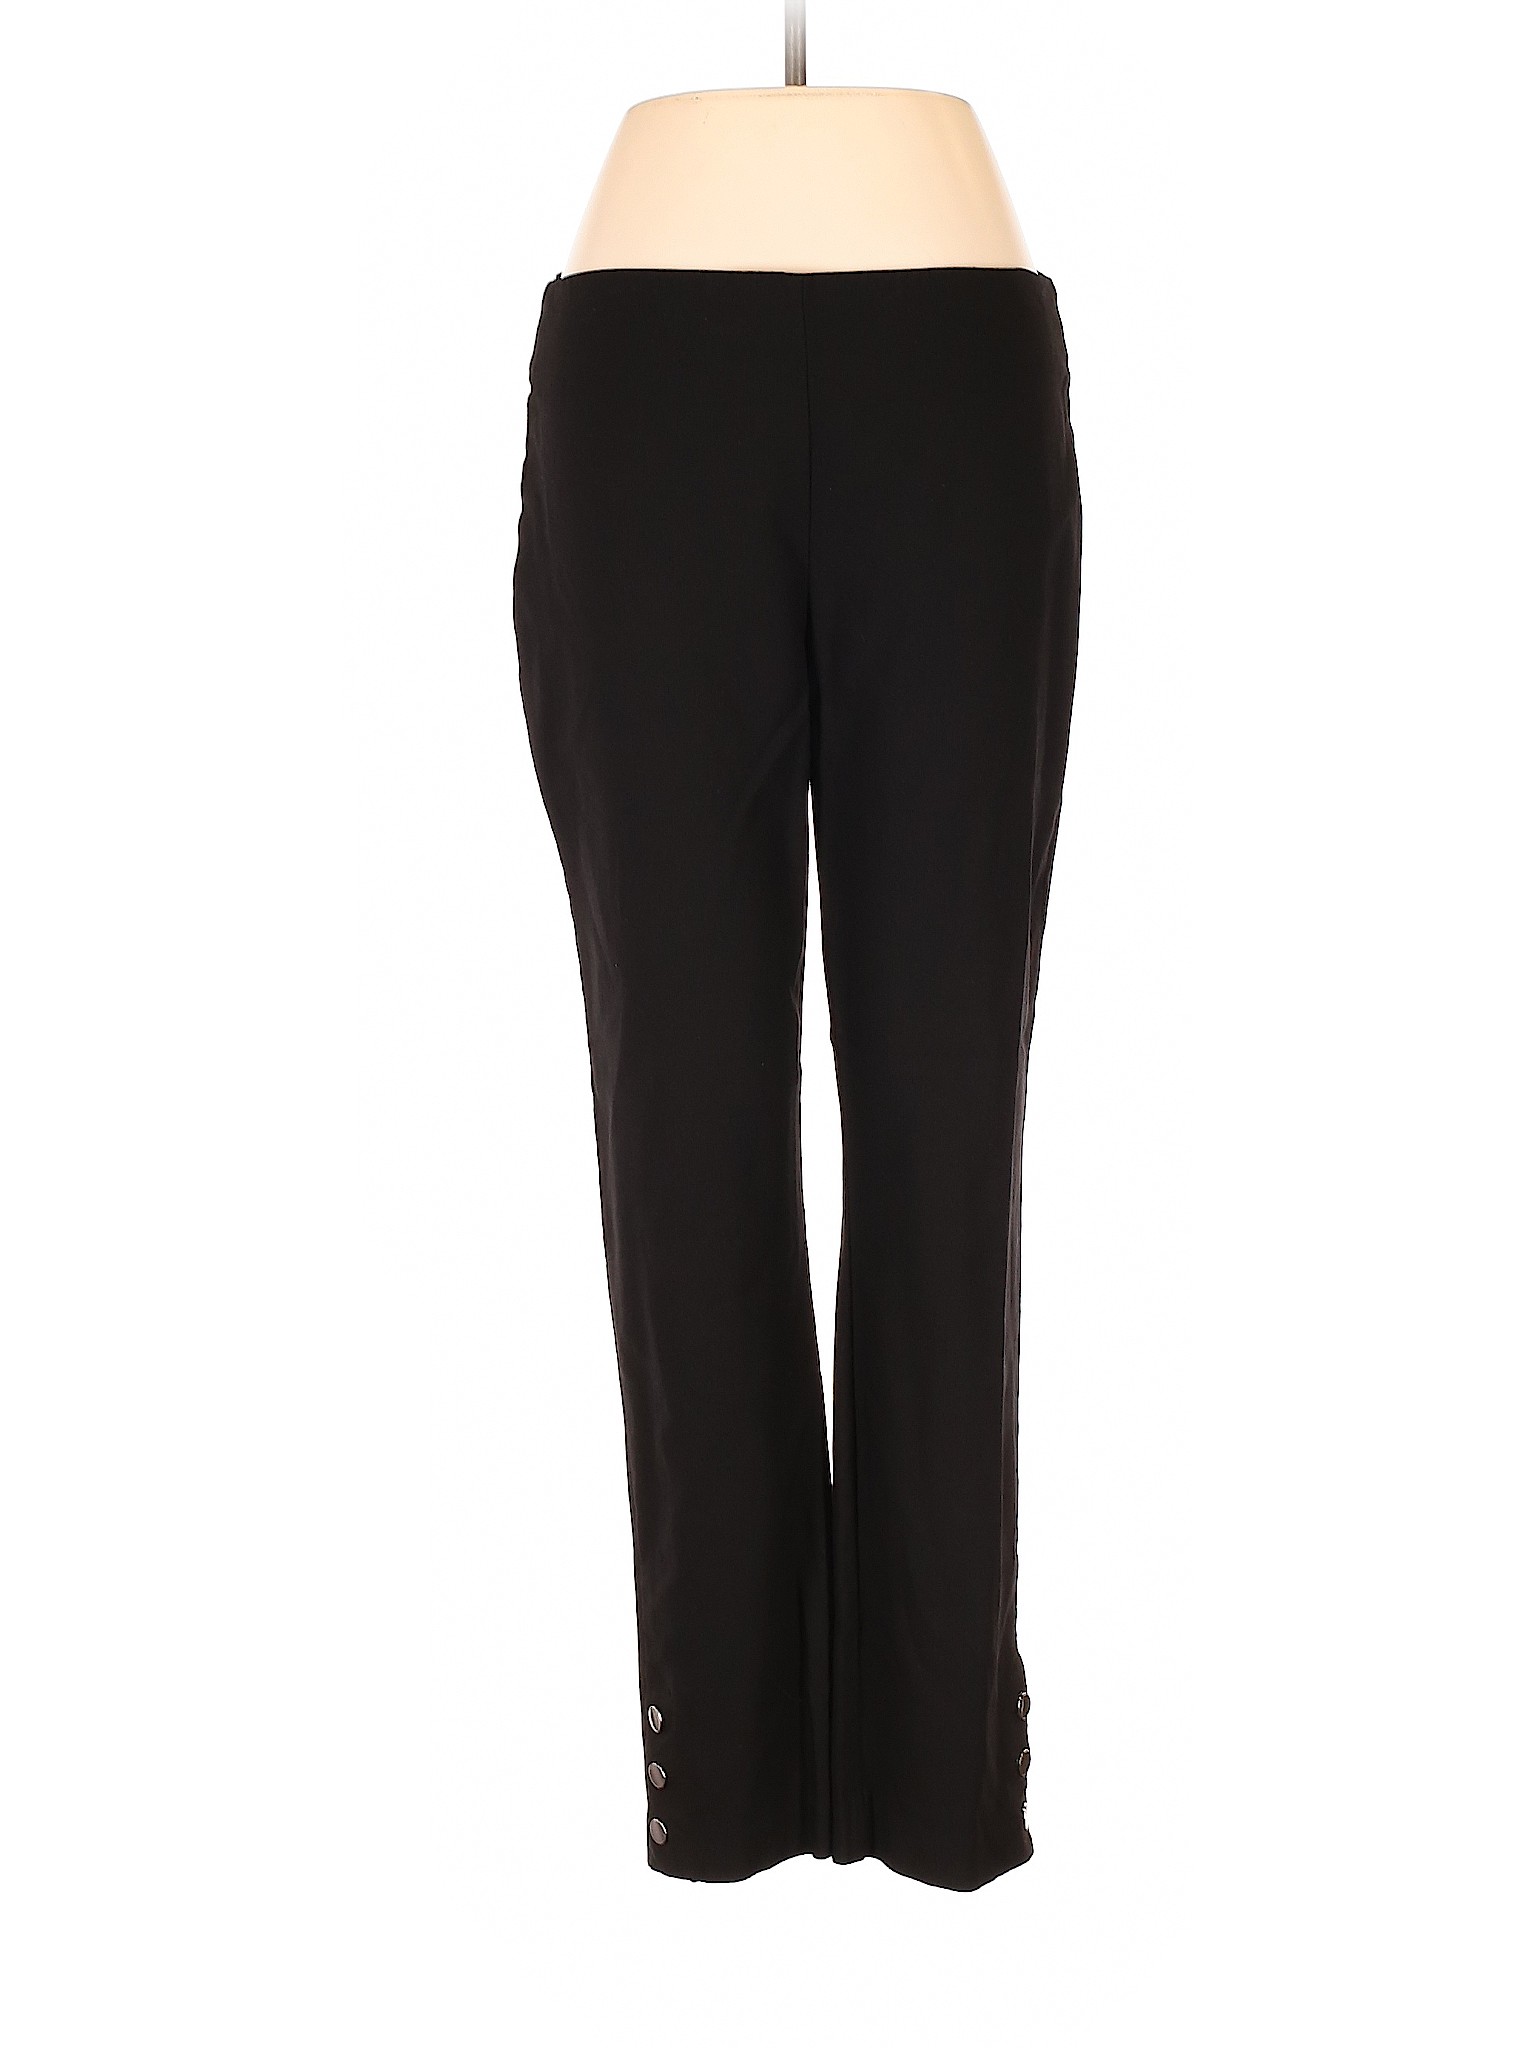 Attyre New York Women Black Casual Pants 8 | eBay